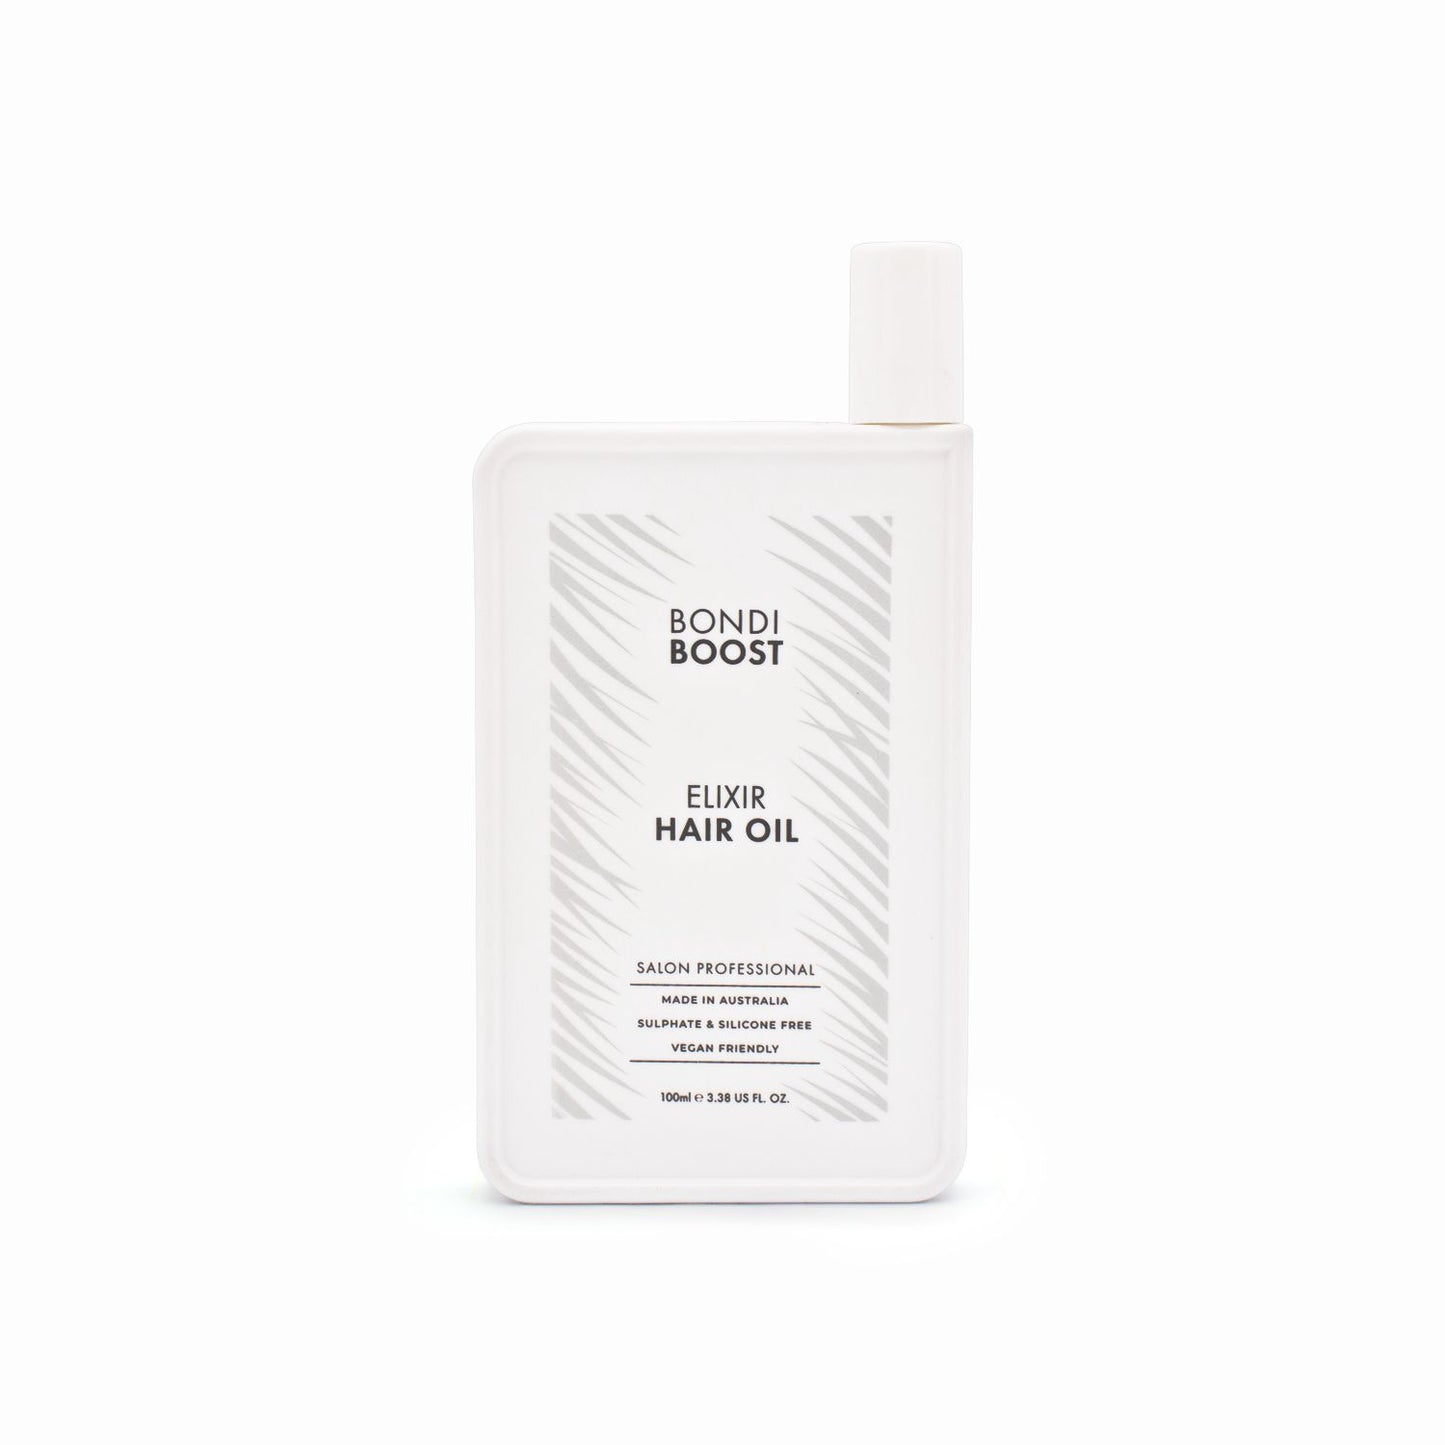 Bondi Boost Elixir Hair Oil 100ml - Imperfect Container